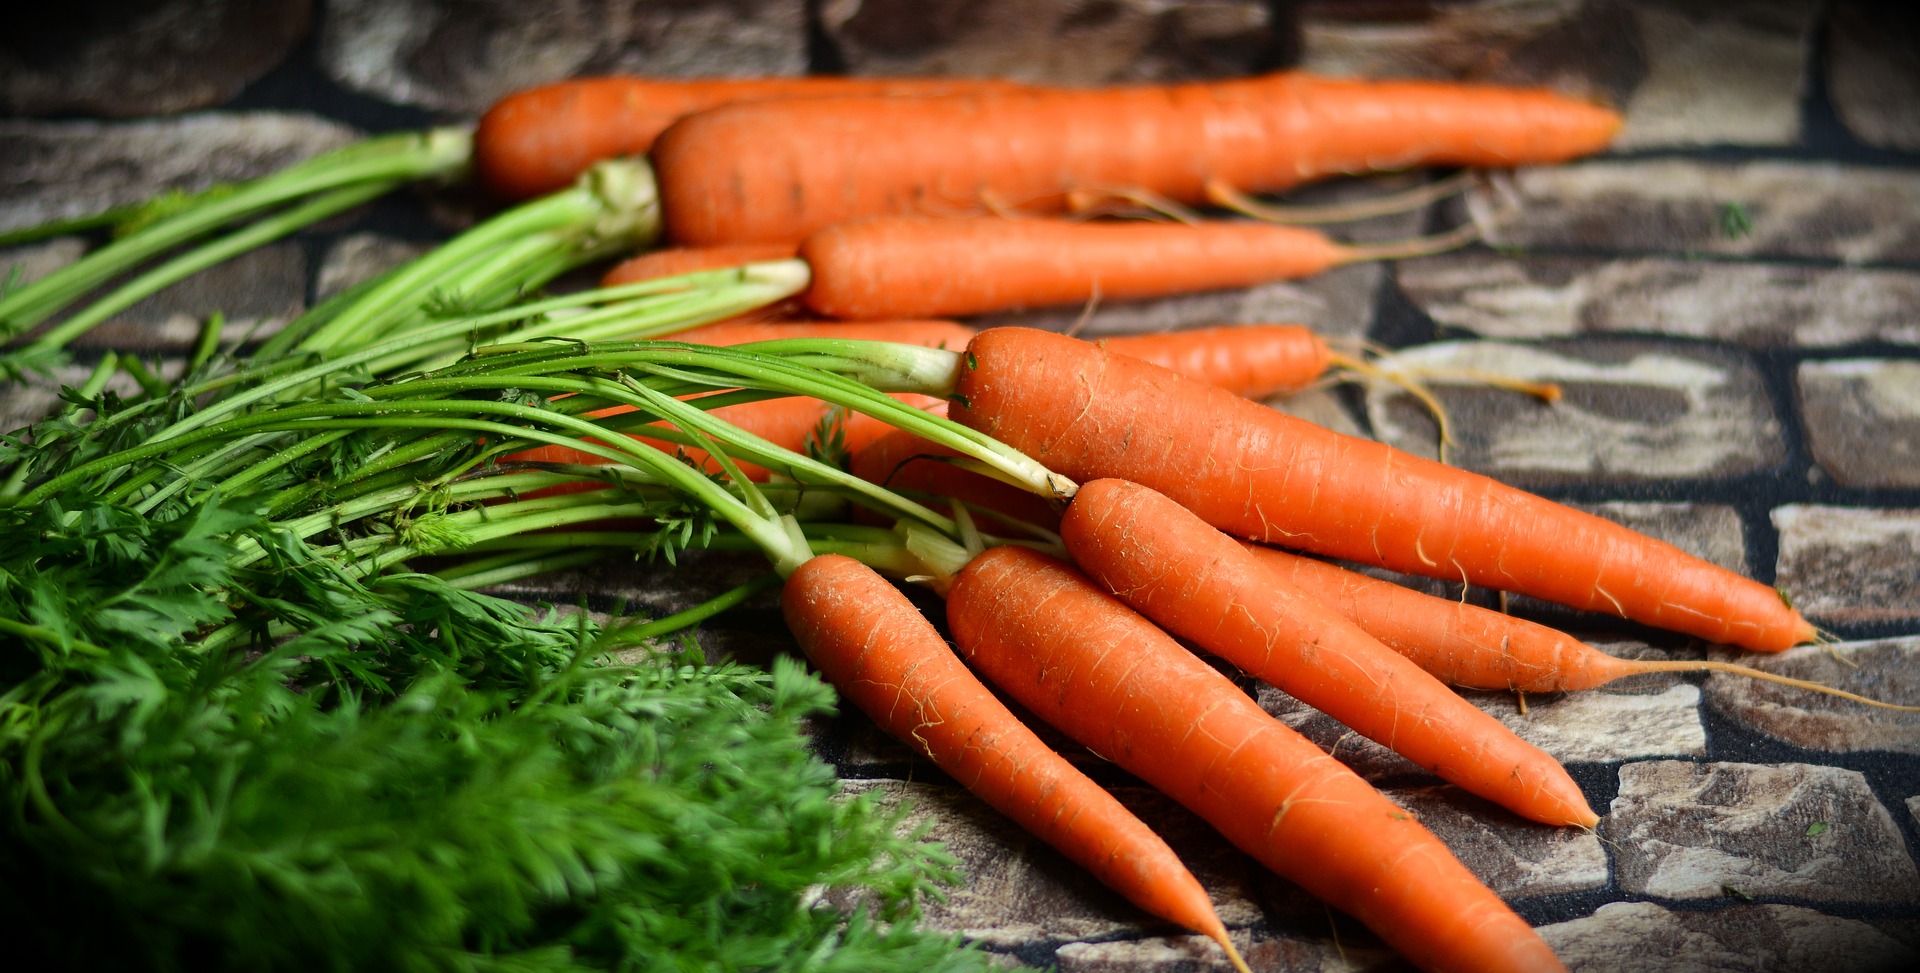 Carrots contain cellulosic nano platelets